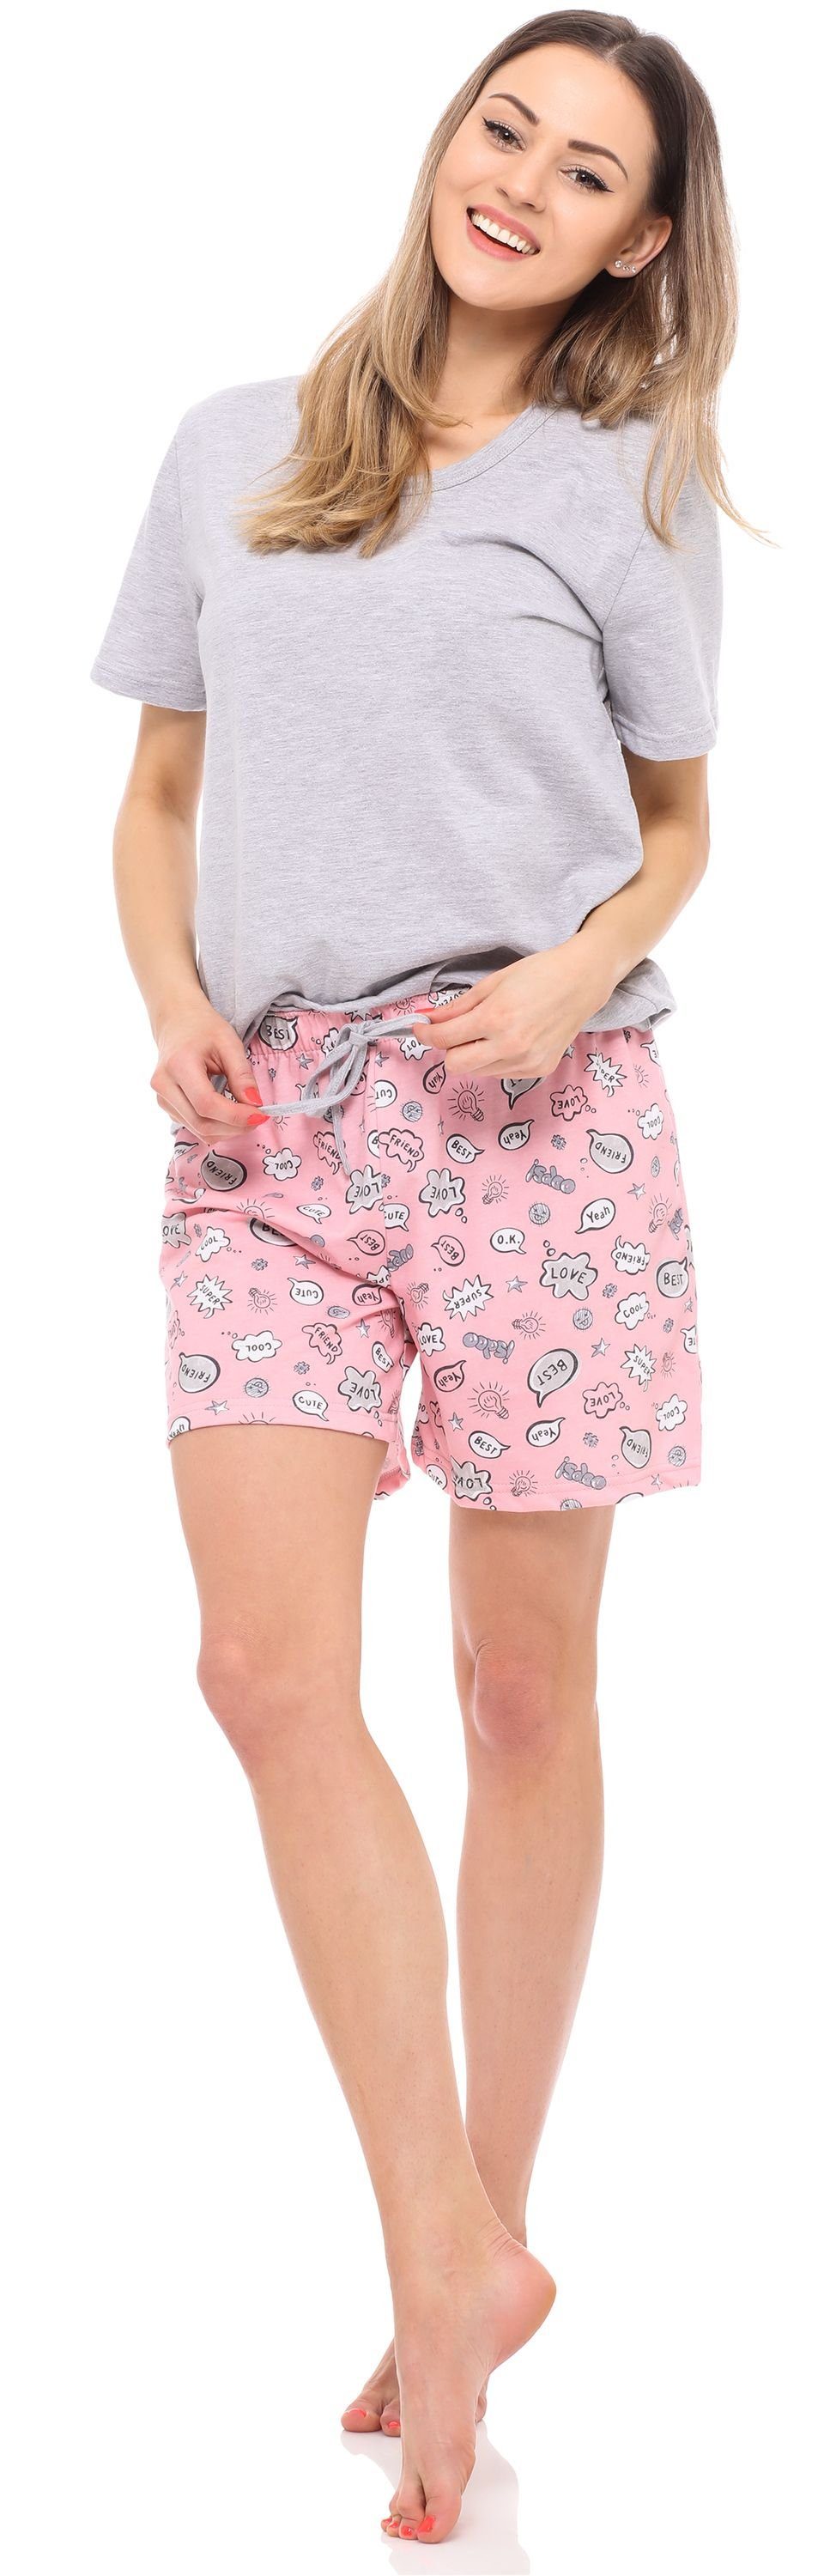 Schlafanzug Melange/Rosa Pyjama Baumwolle Damen Merry Pyjama Zweiteiler Set Kurz Schlafanzug MS10-177 Style